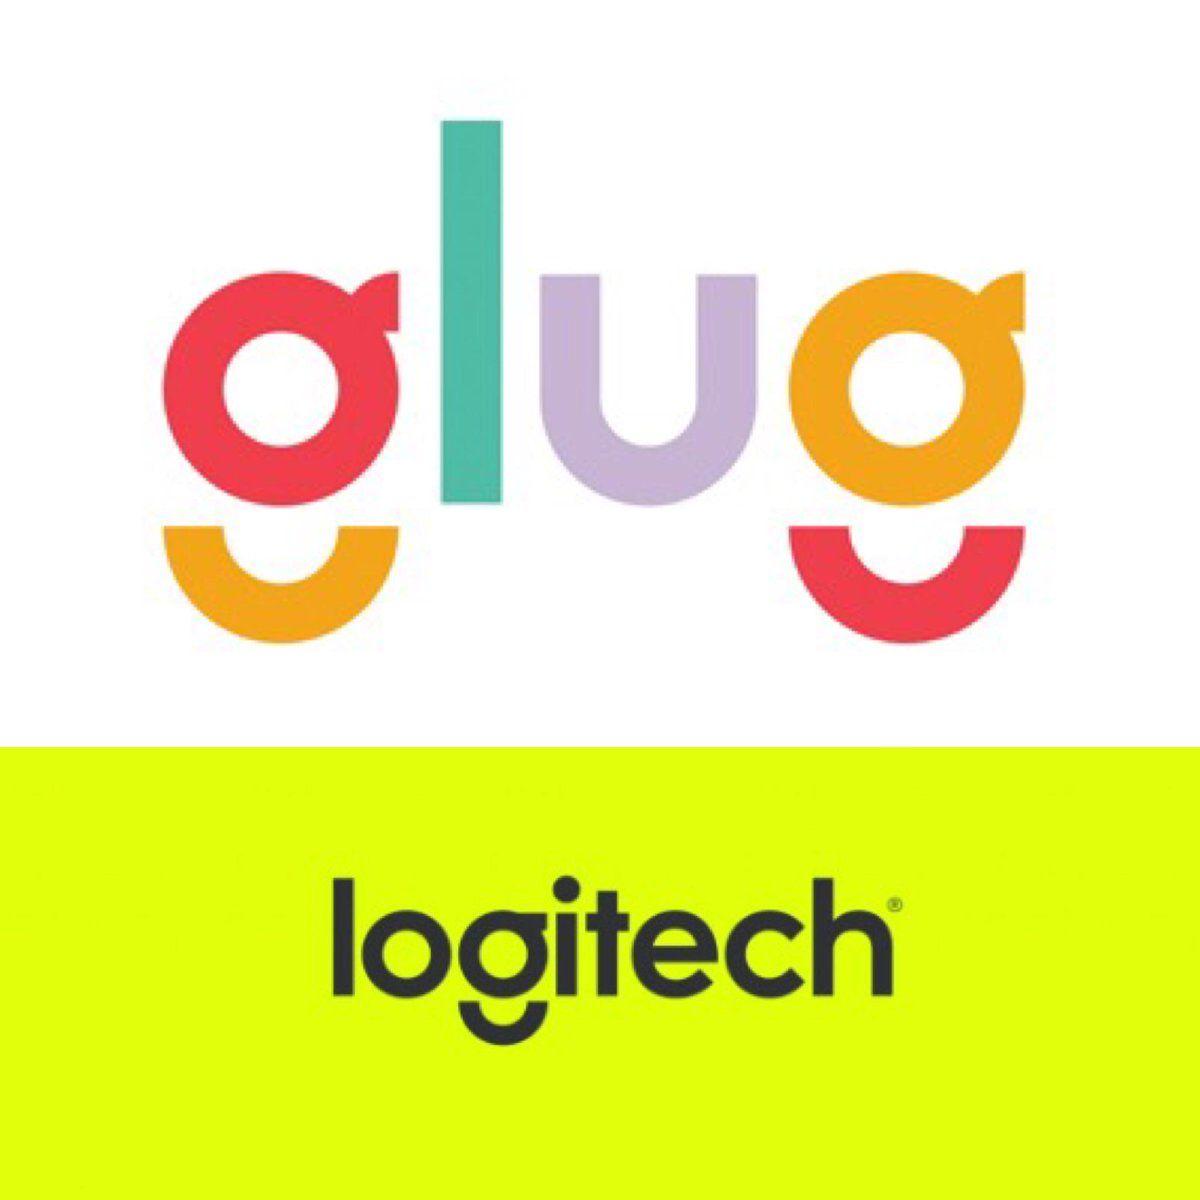 Logitech Logo - Glug HQ new logo is looking quite